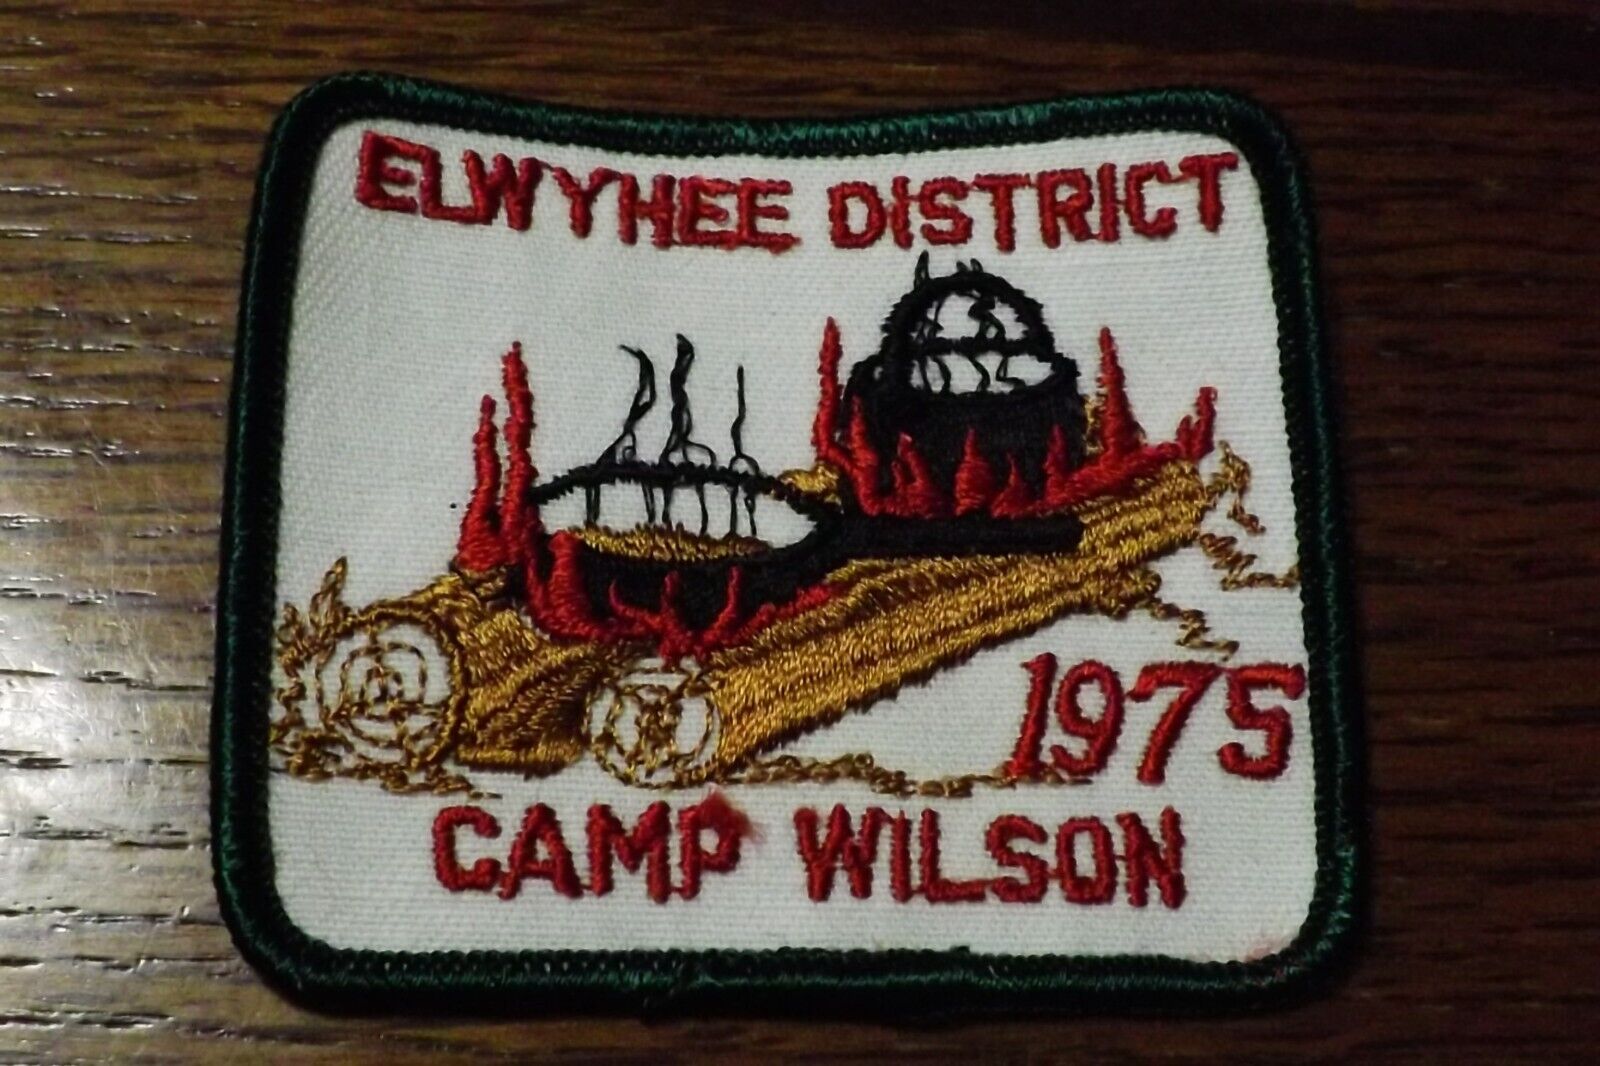 BOY SCOUT PATCH 1975 CAMP WILSON ELWYHEE DISTRICT NOS